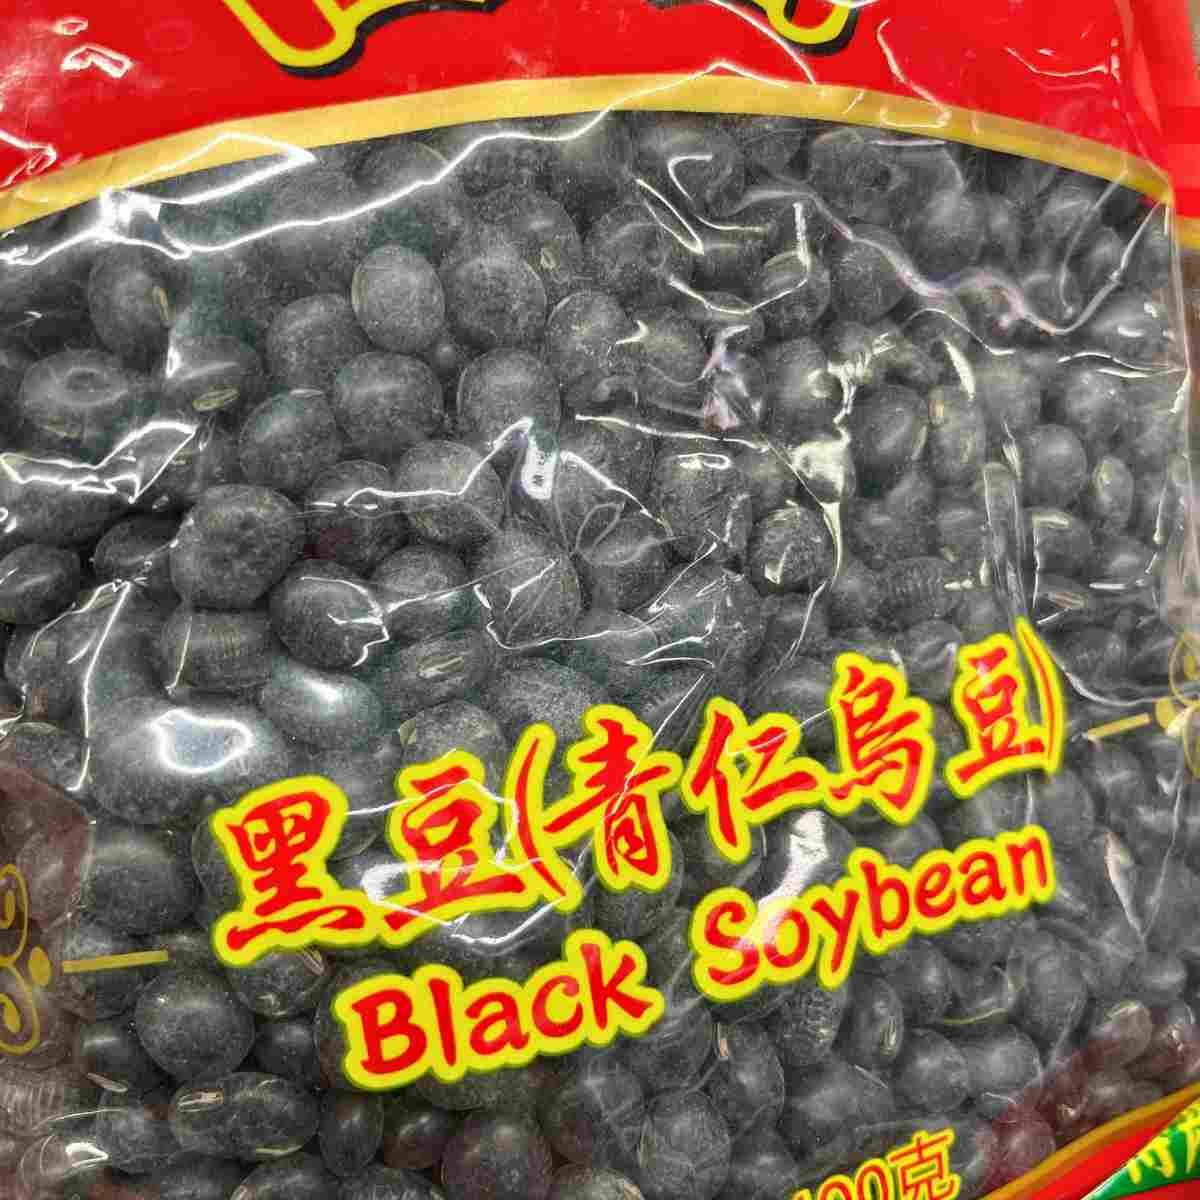 Raw black soybeans